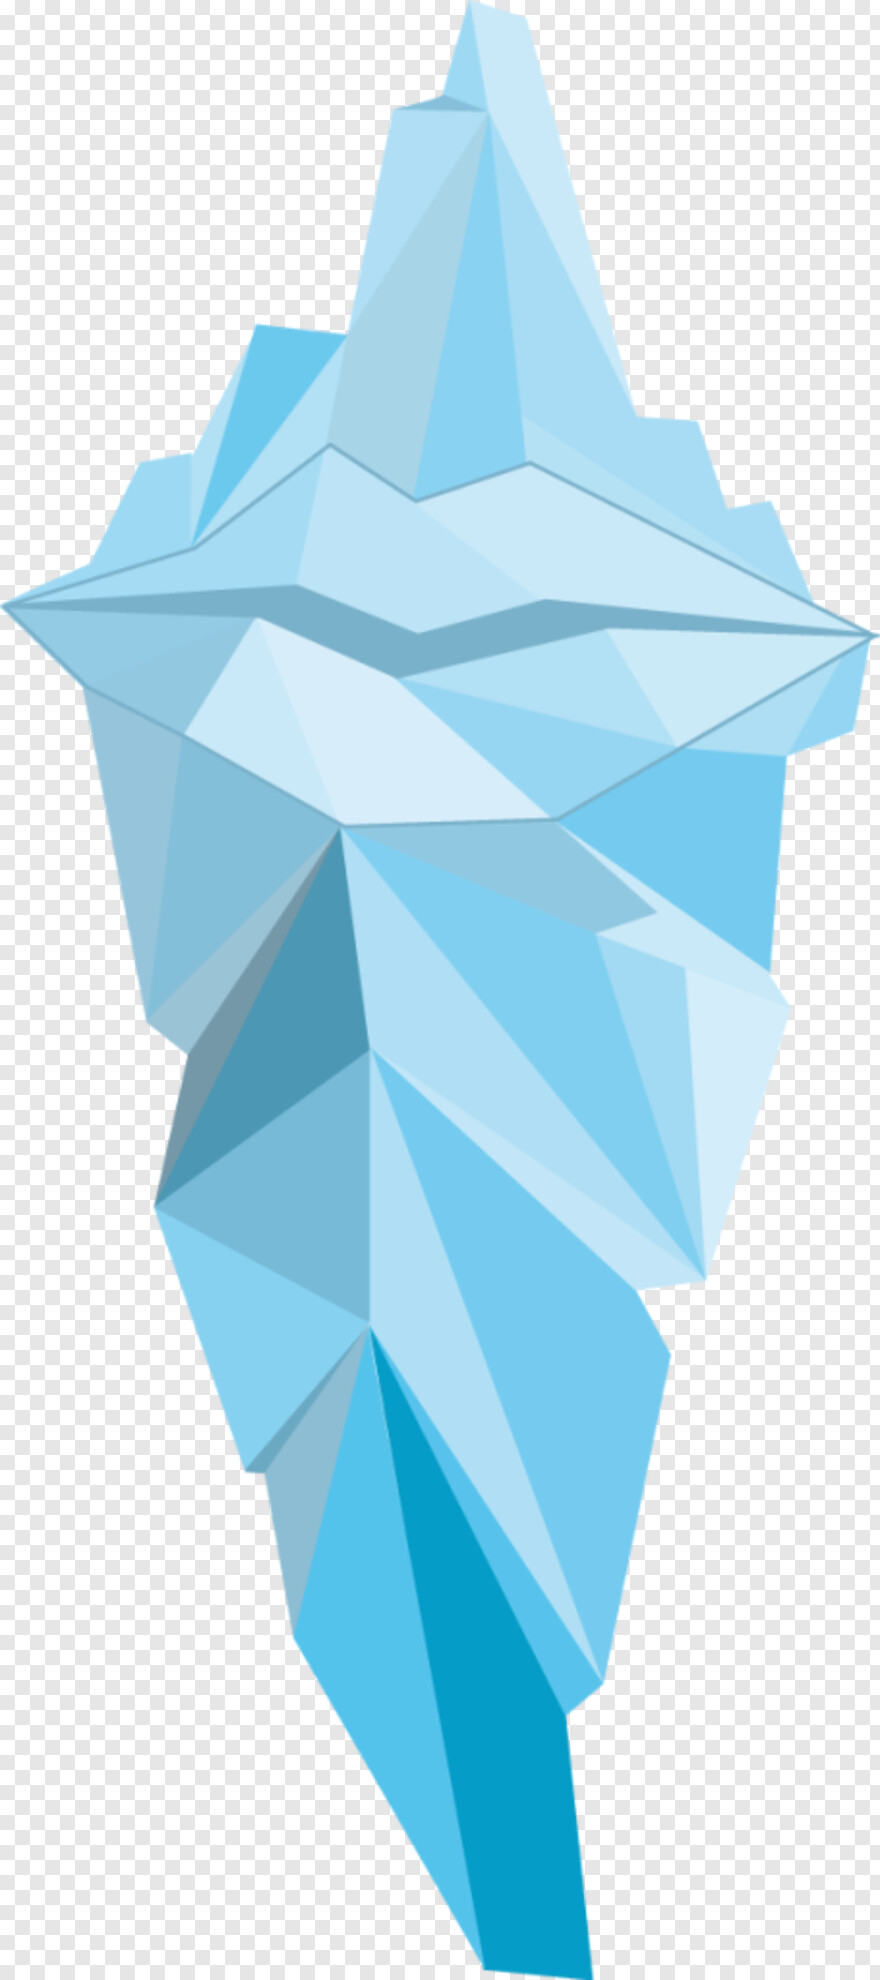 iceberg # 752845